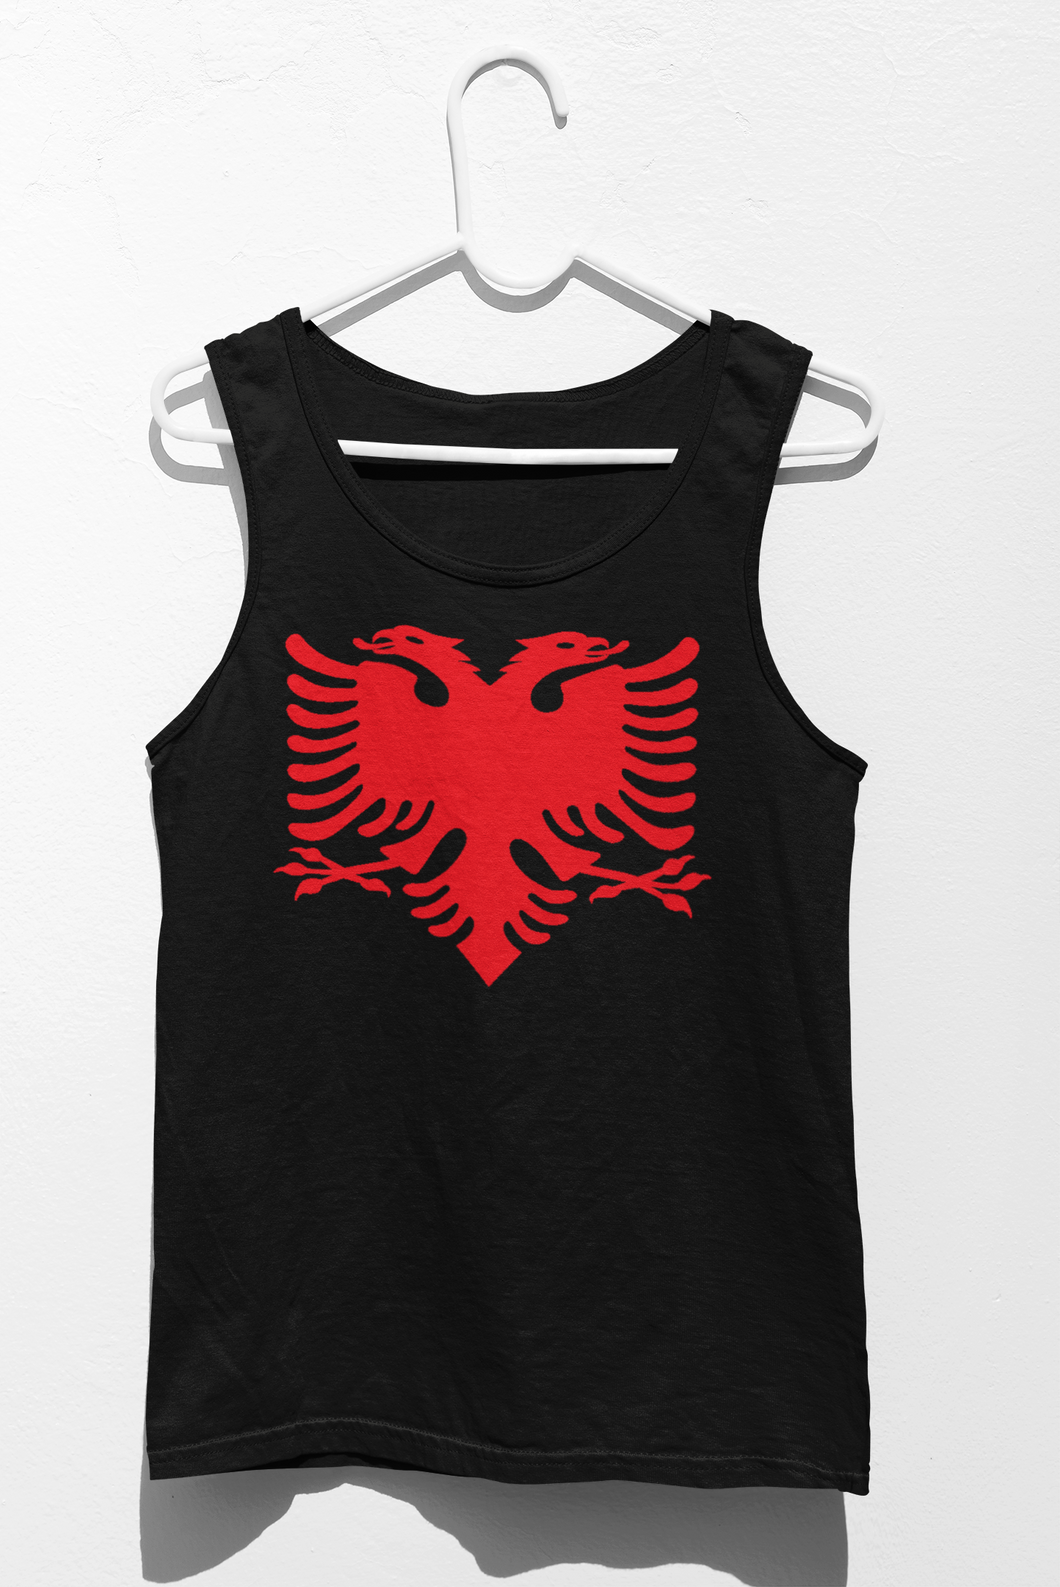 Albanian Eagle Sleeveless Shirts Vest (Man Vest)